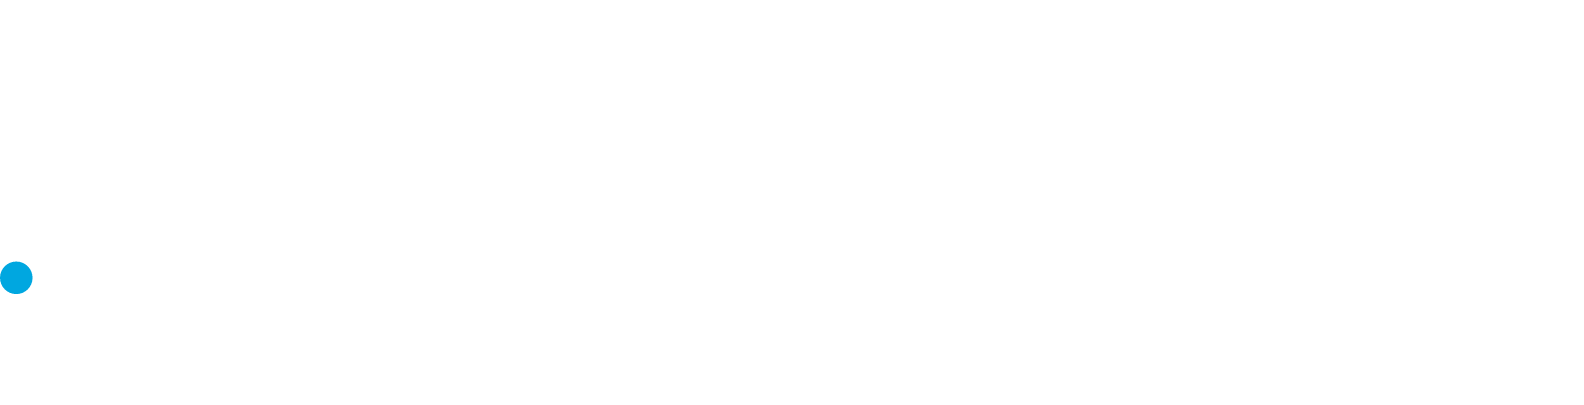 Rhythm Pharmaceuticals logo large for dark backgrounds (transparent PNG)